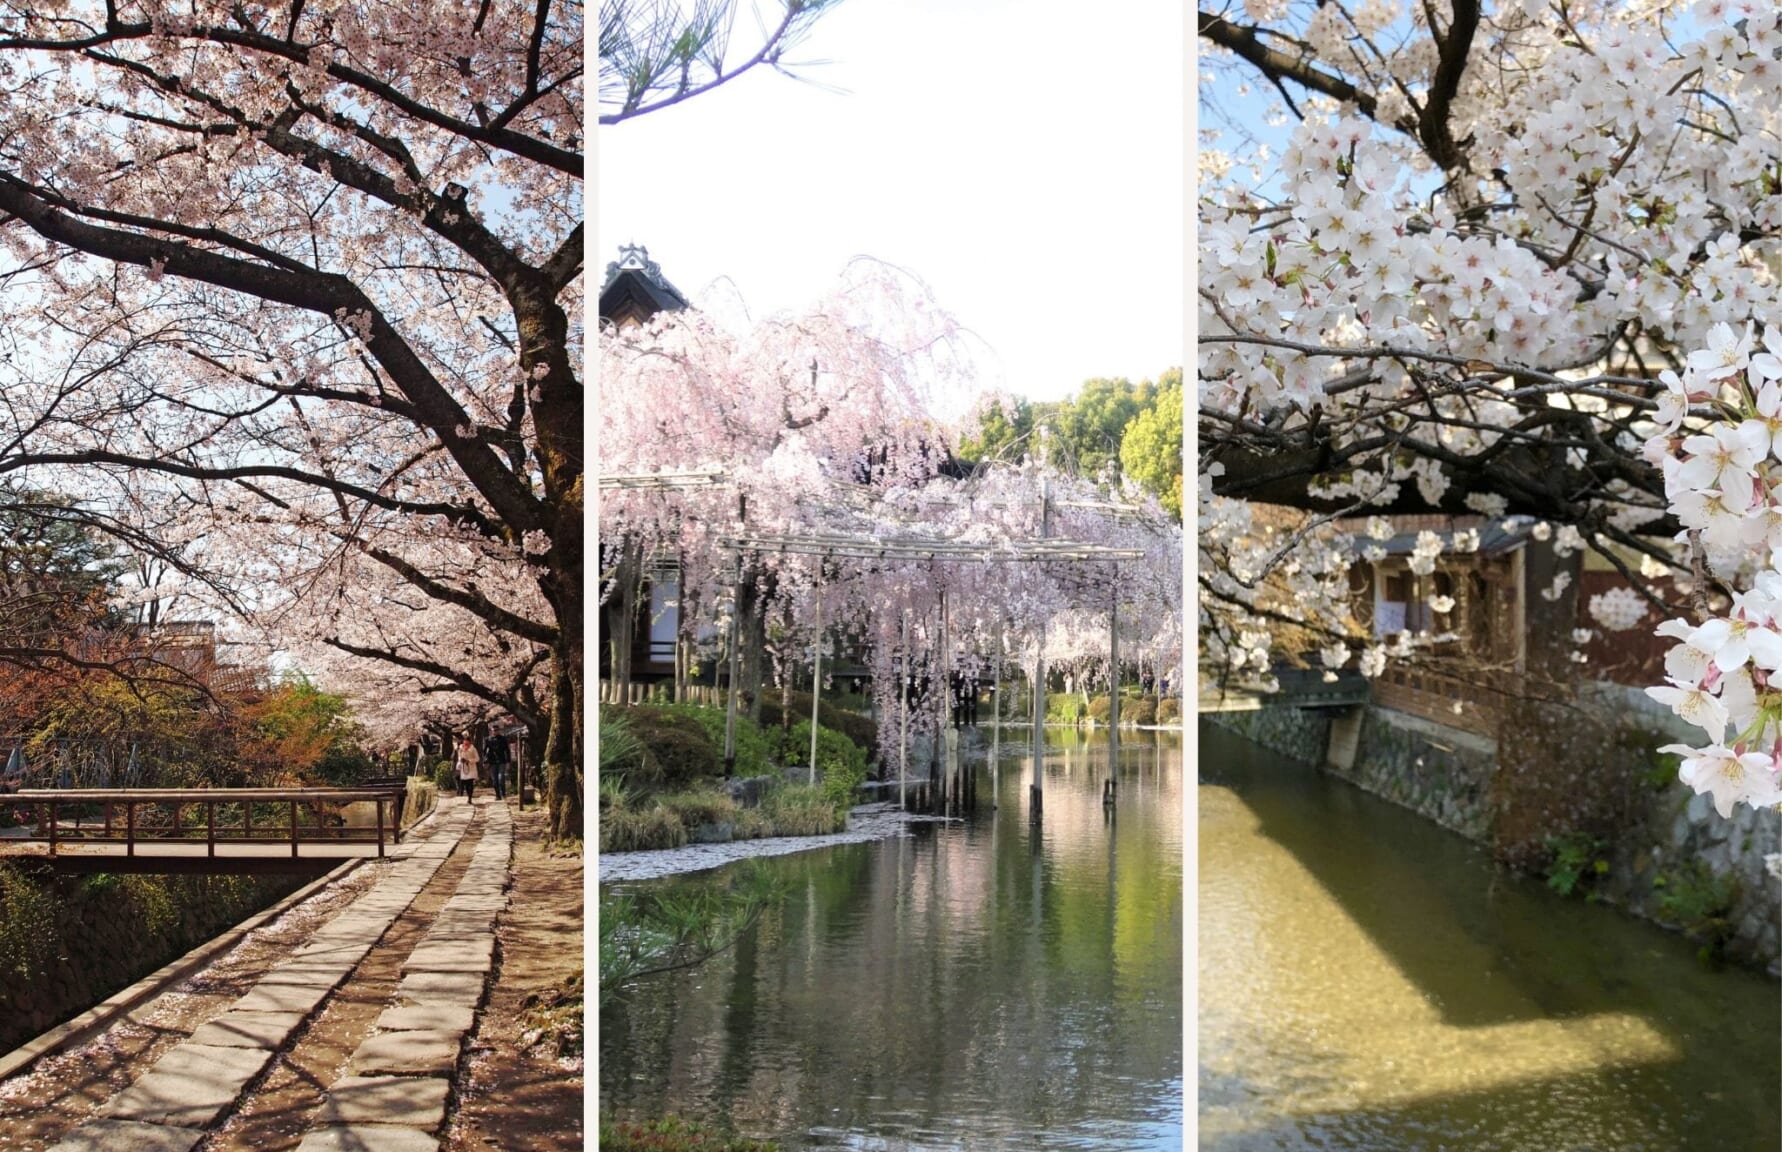 Philosopher’s Path, Heian Shrine and Gion during sakura season